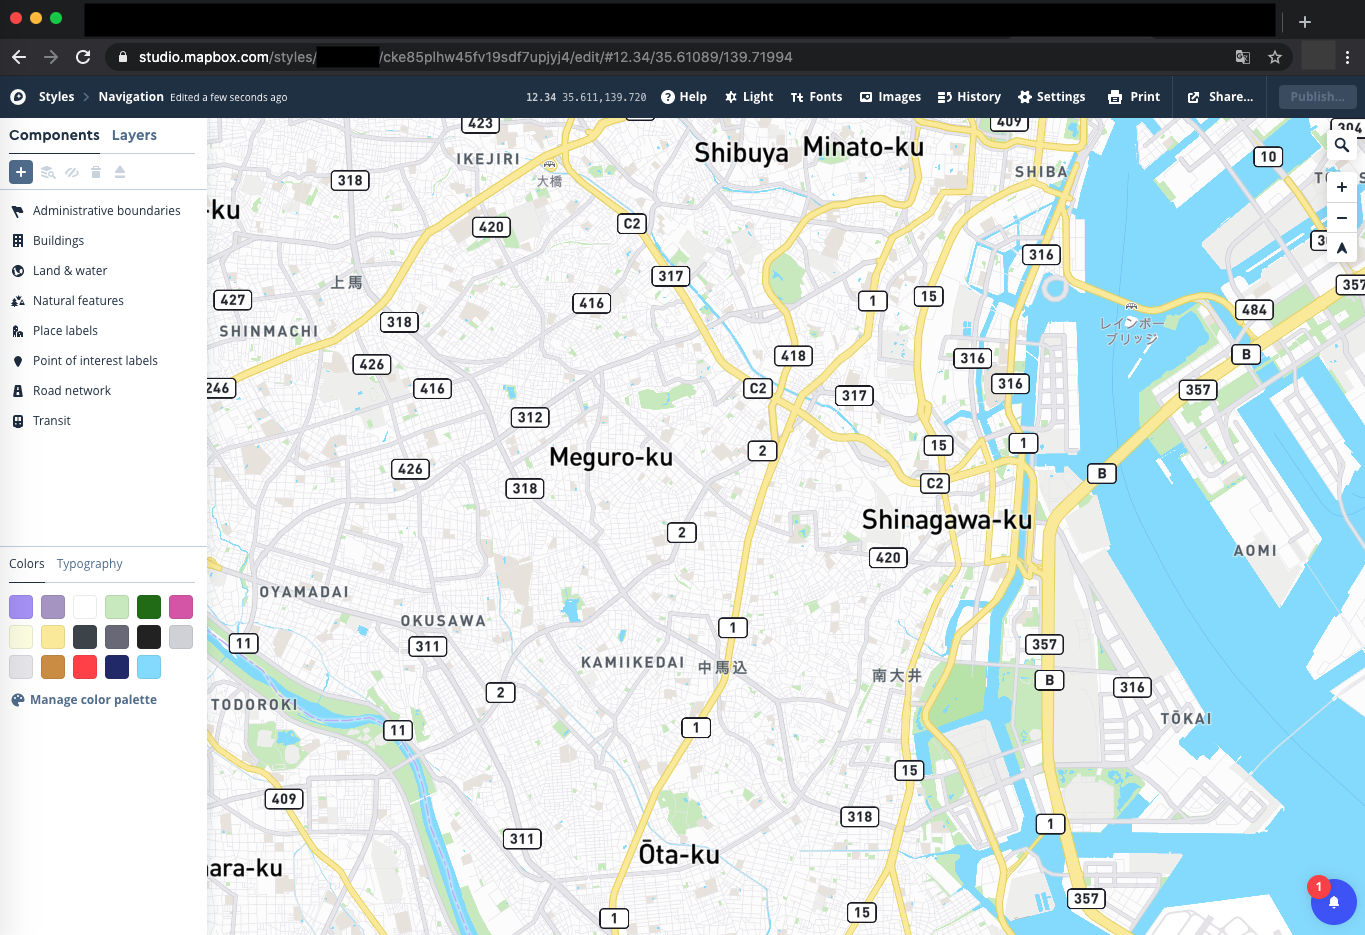 mapbox studioのエディタ機能で地図を編集